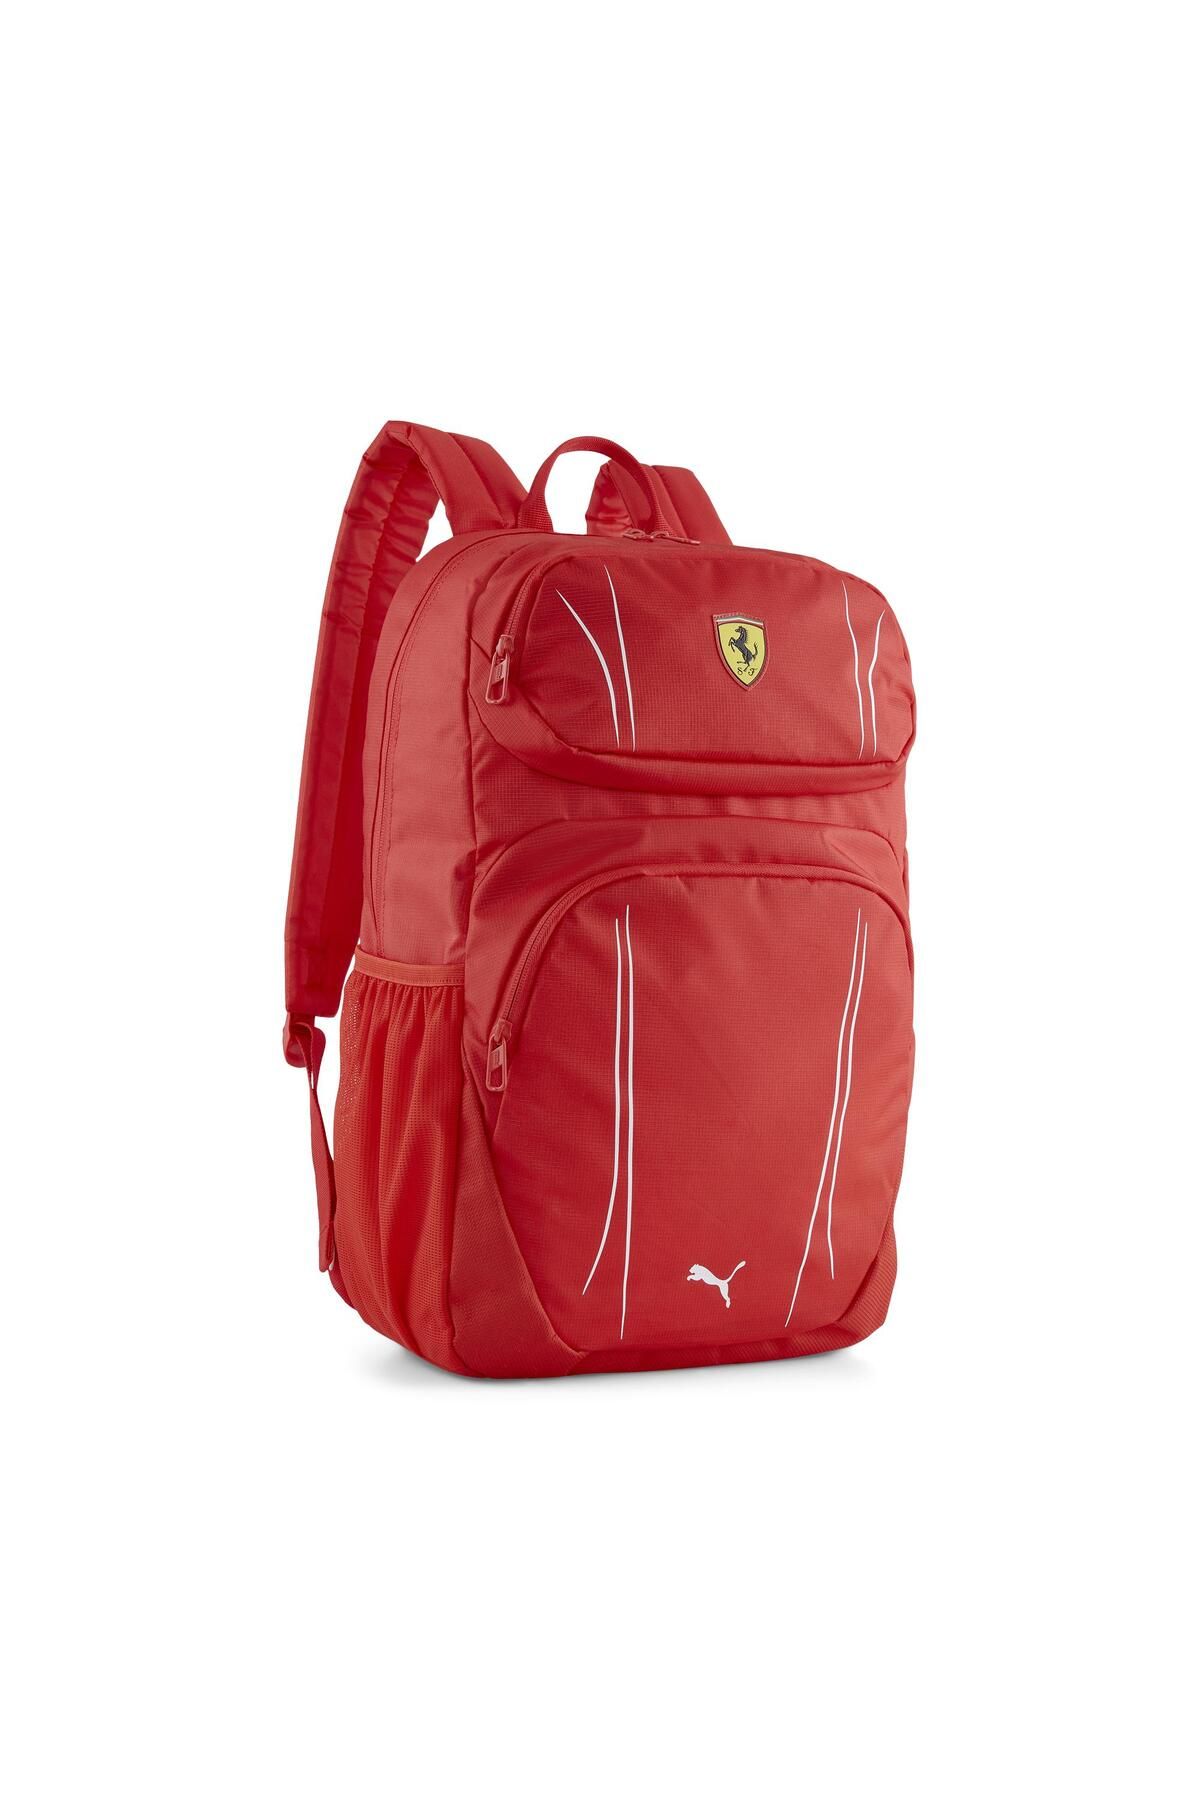 Puma Ferrari SPTWR Race Backpack